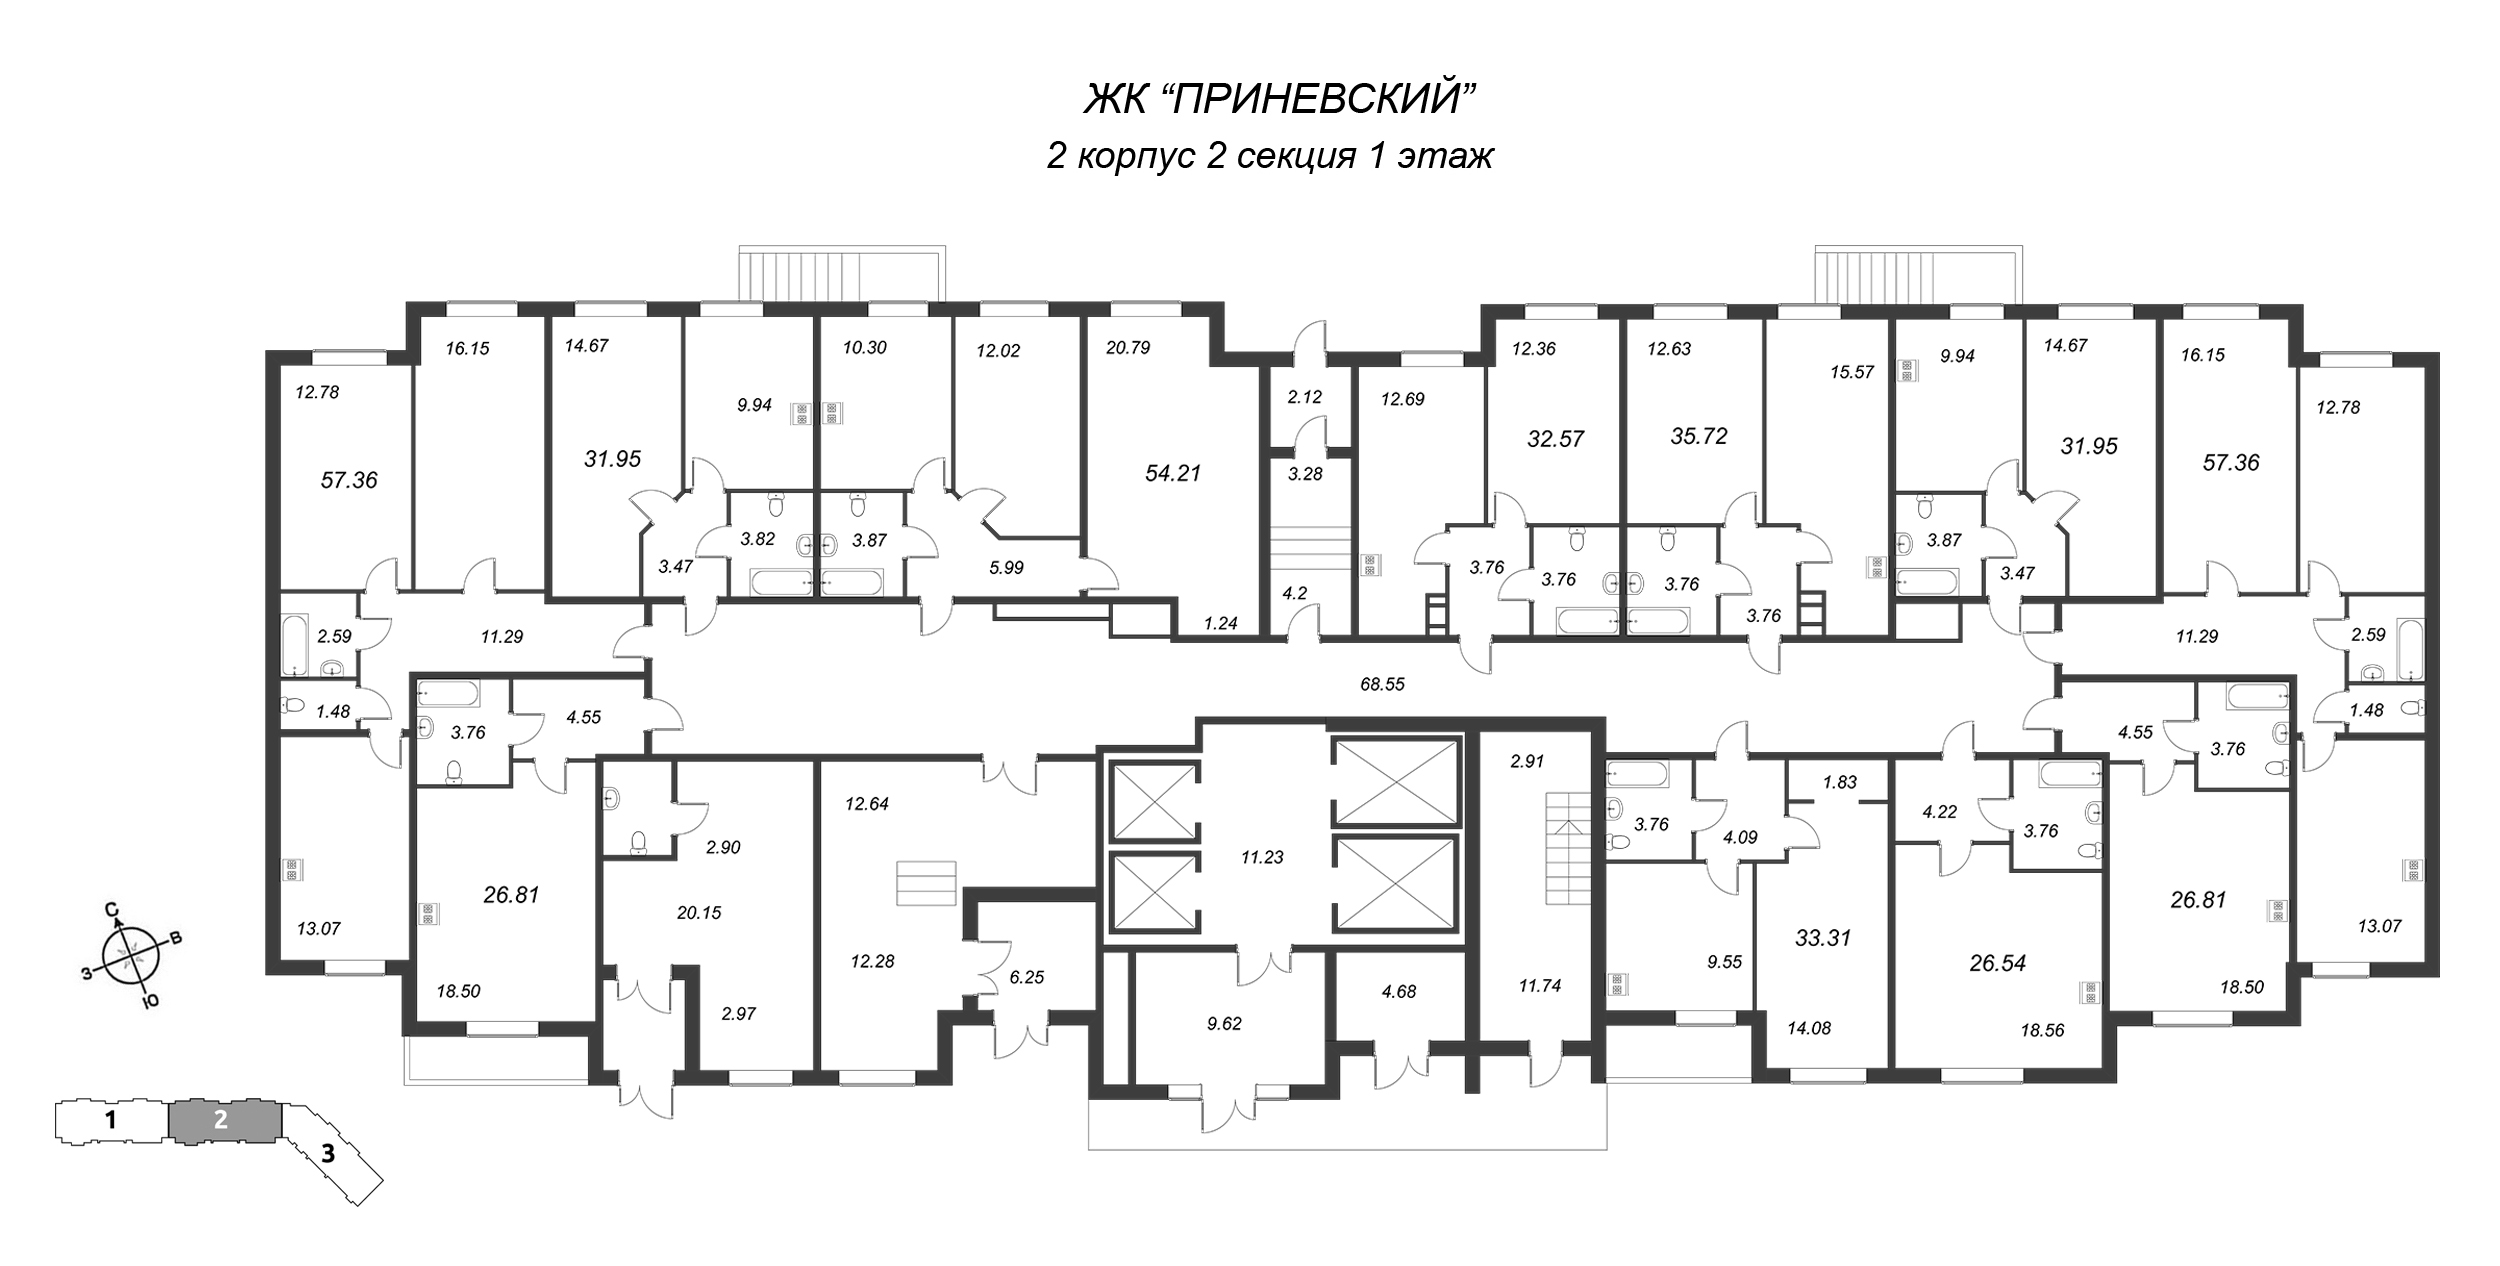 2-комнатная (Евро) квартира, 31.8 м² - планировка этажа